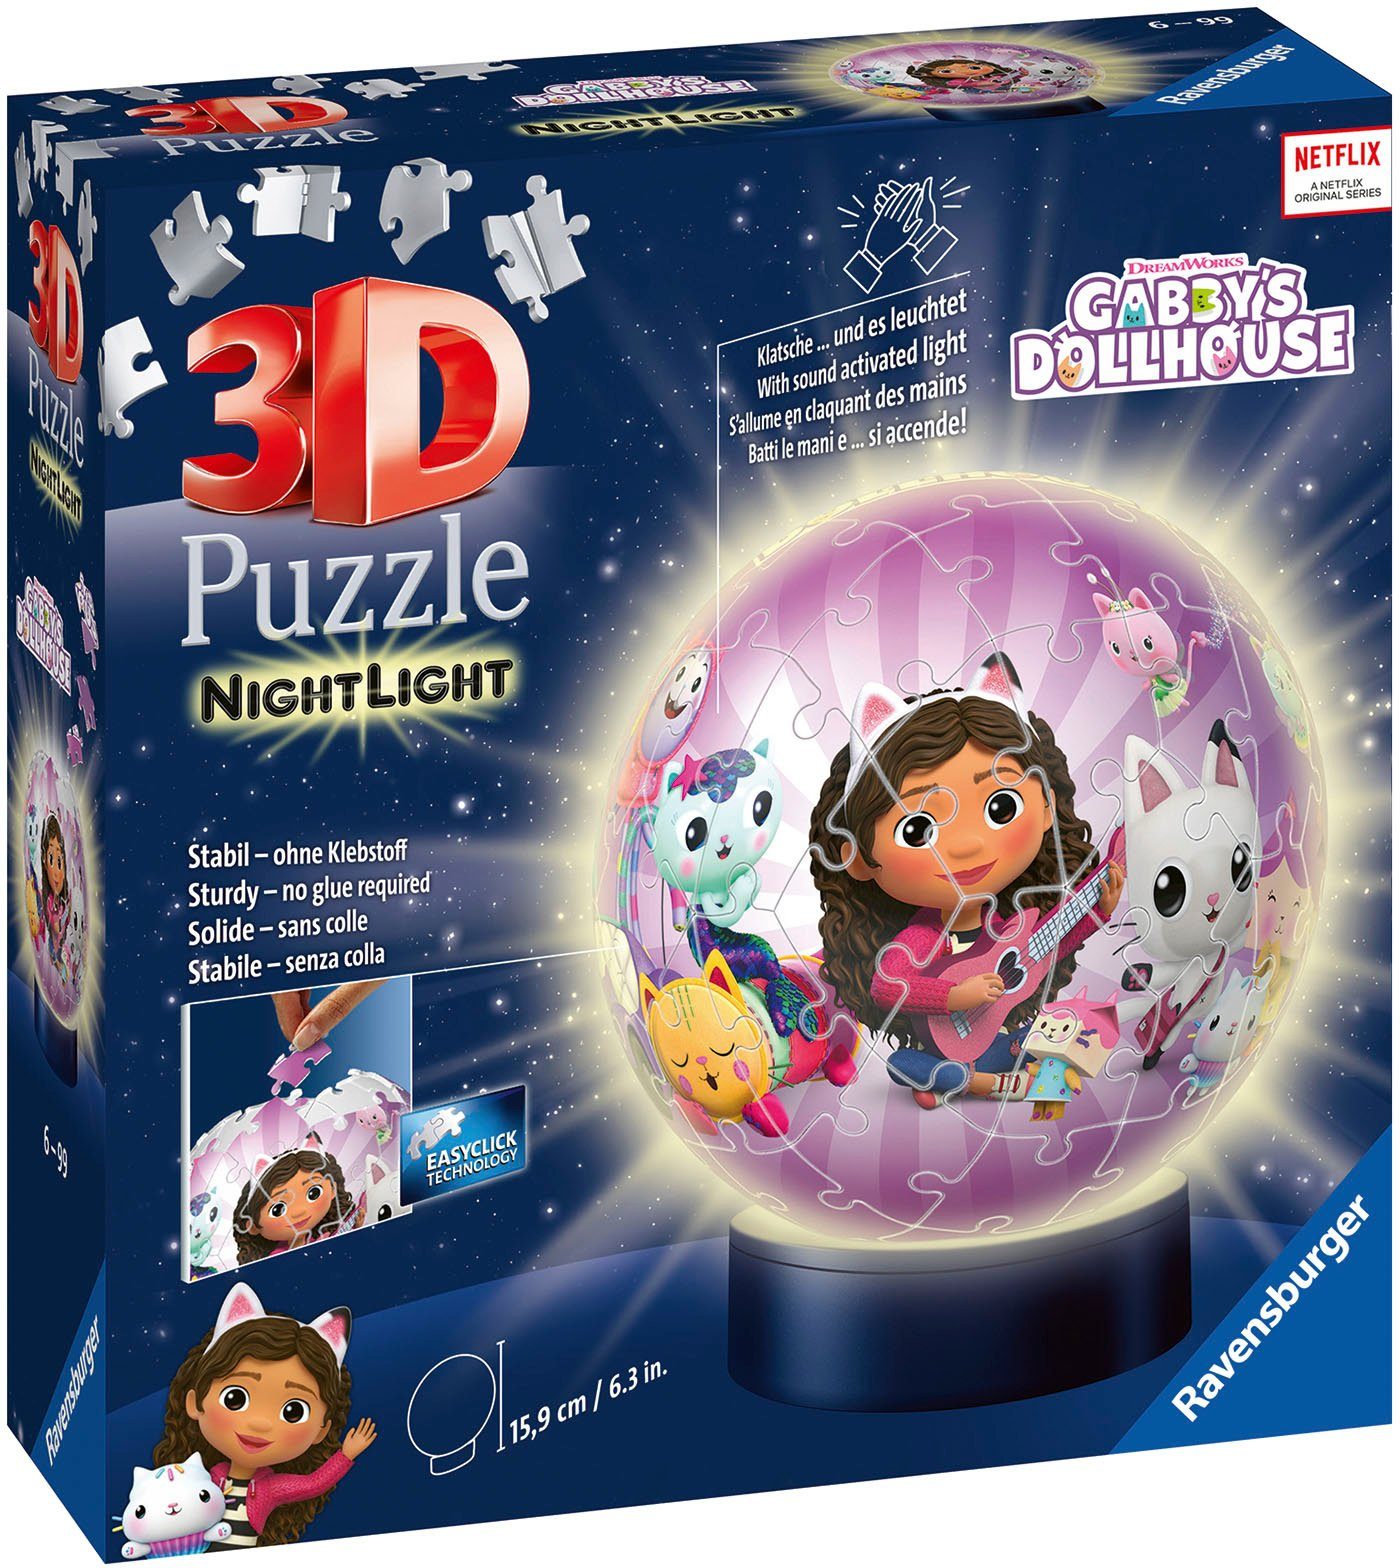 Puzzleteile, Dollhouse, Gabby's Ravensburger in 72 Puzzleball Nachtlicht Europe Made